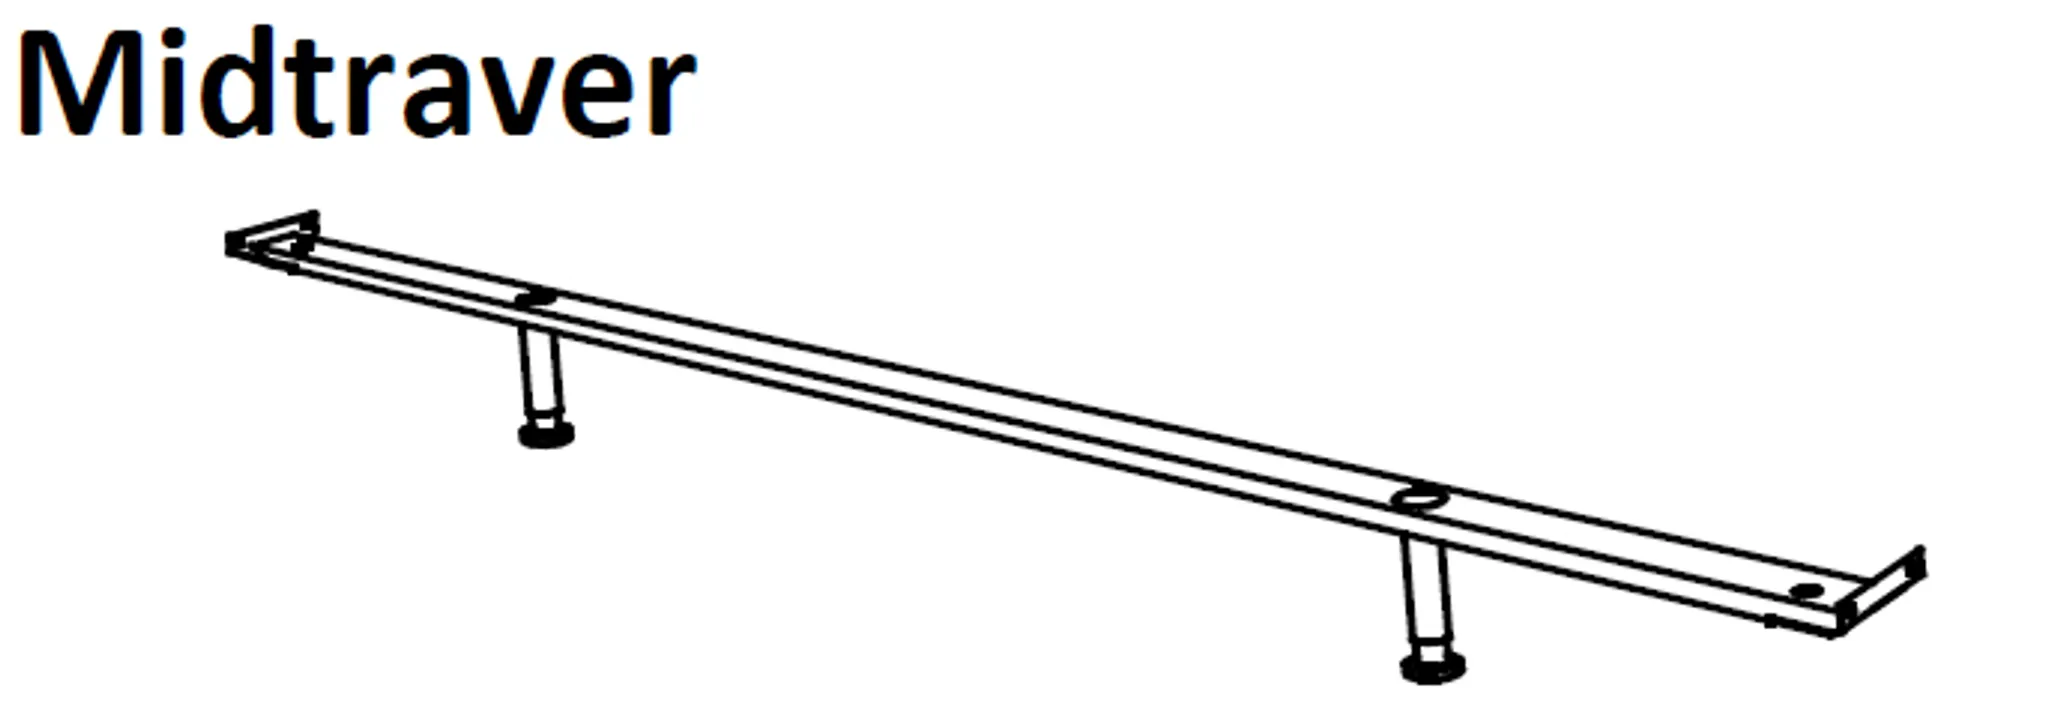 Hasena Mitteltraverse Midtraver Mittelstütze cm cm, 20-30 Fußhöhe 200